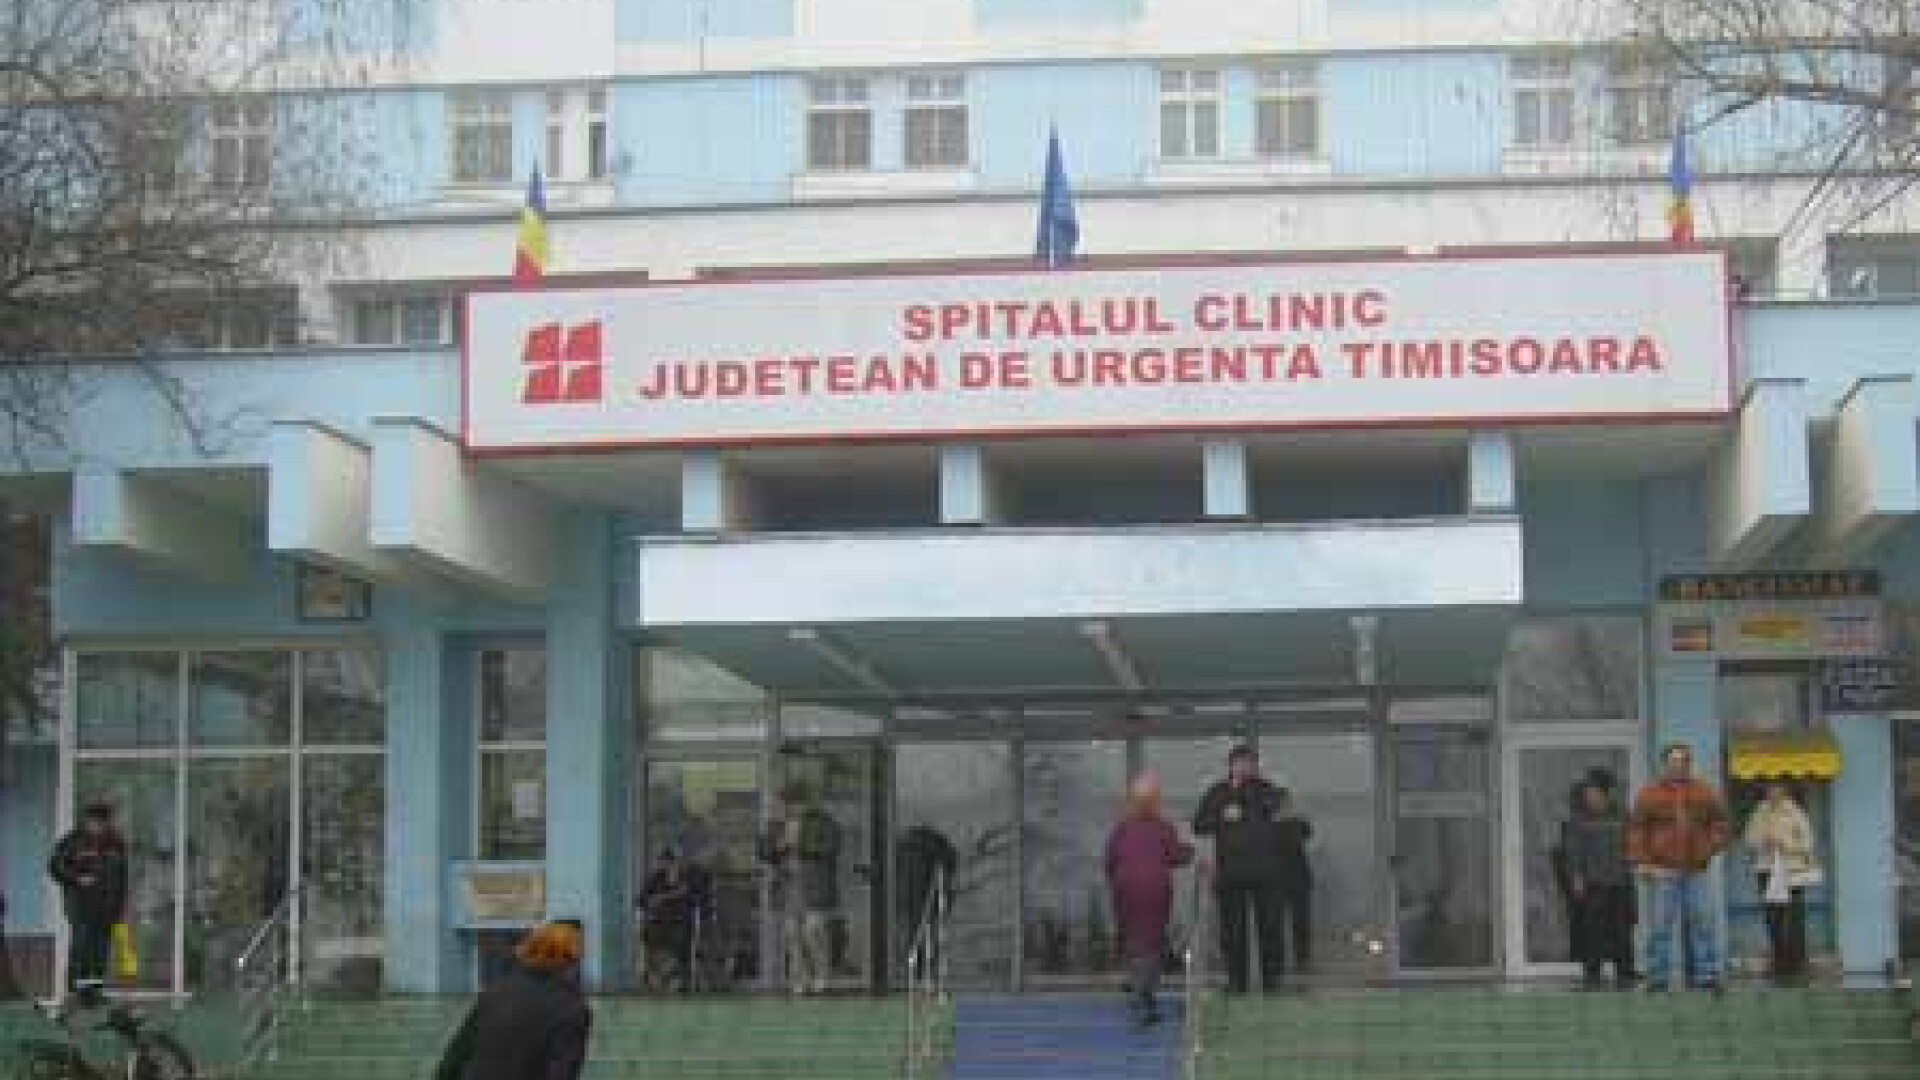 Spitalul Clinic Judetean de Urgenta Timisoara